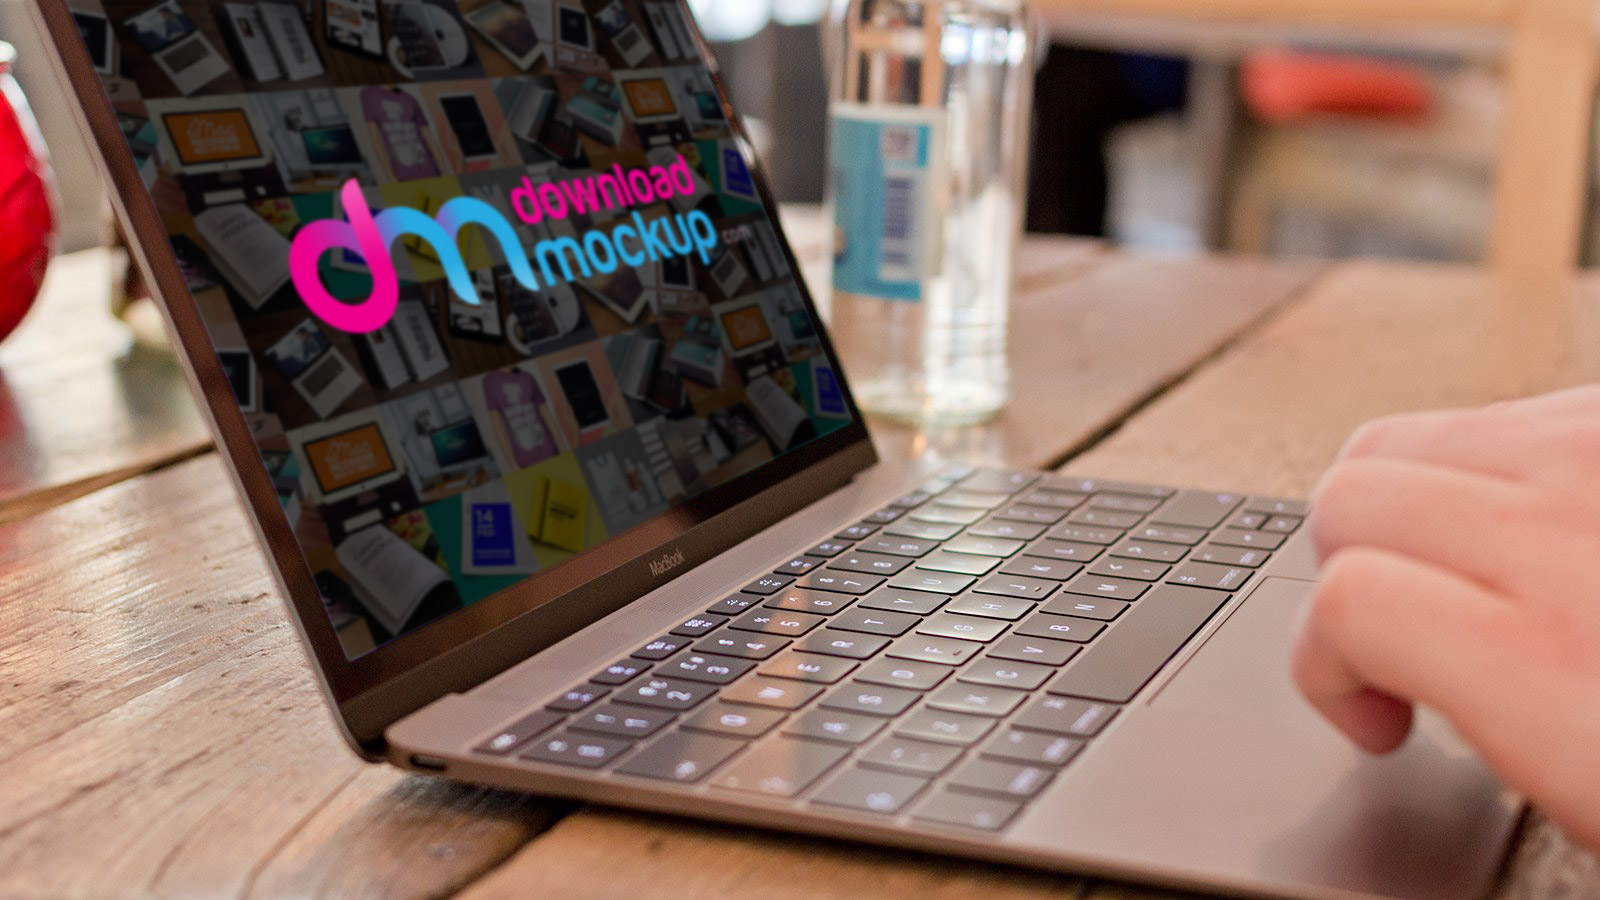 Download New Apple MacBook Mockup Free PSD | Download Mockup